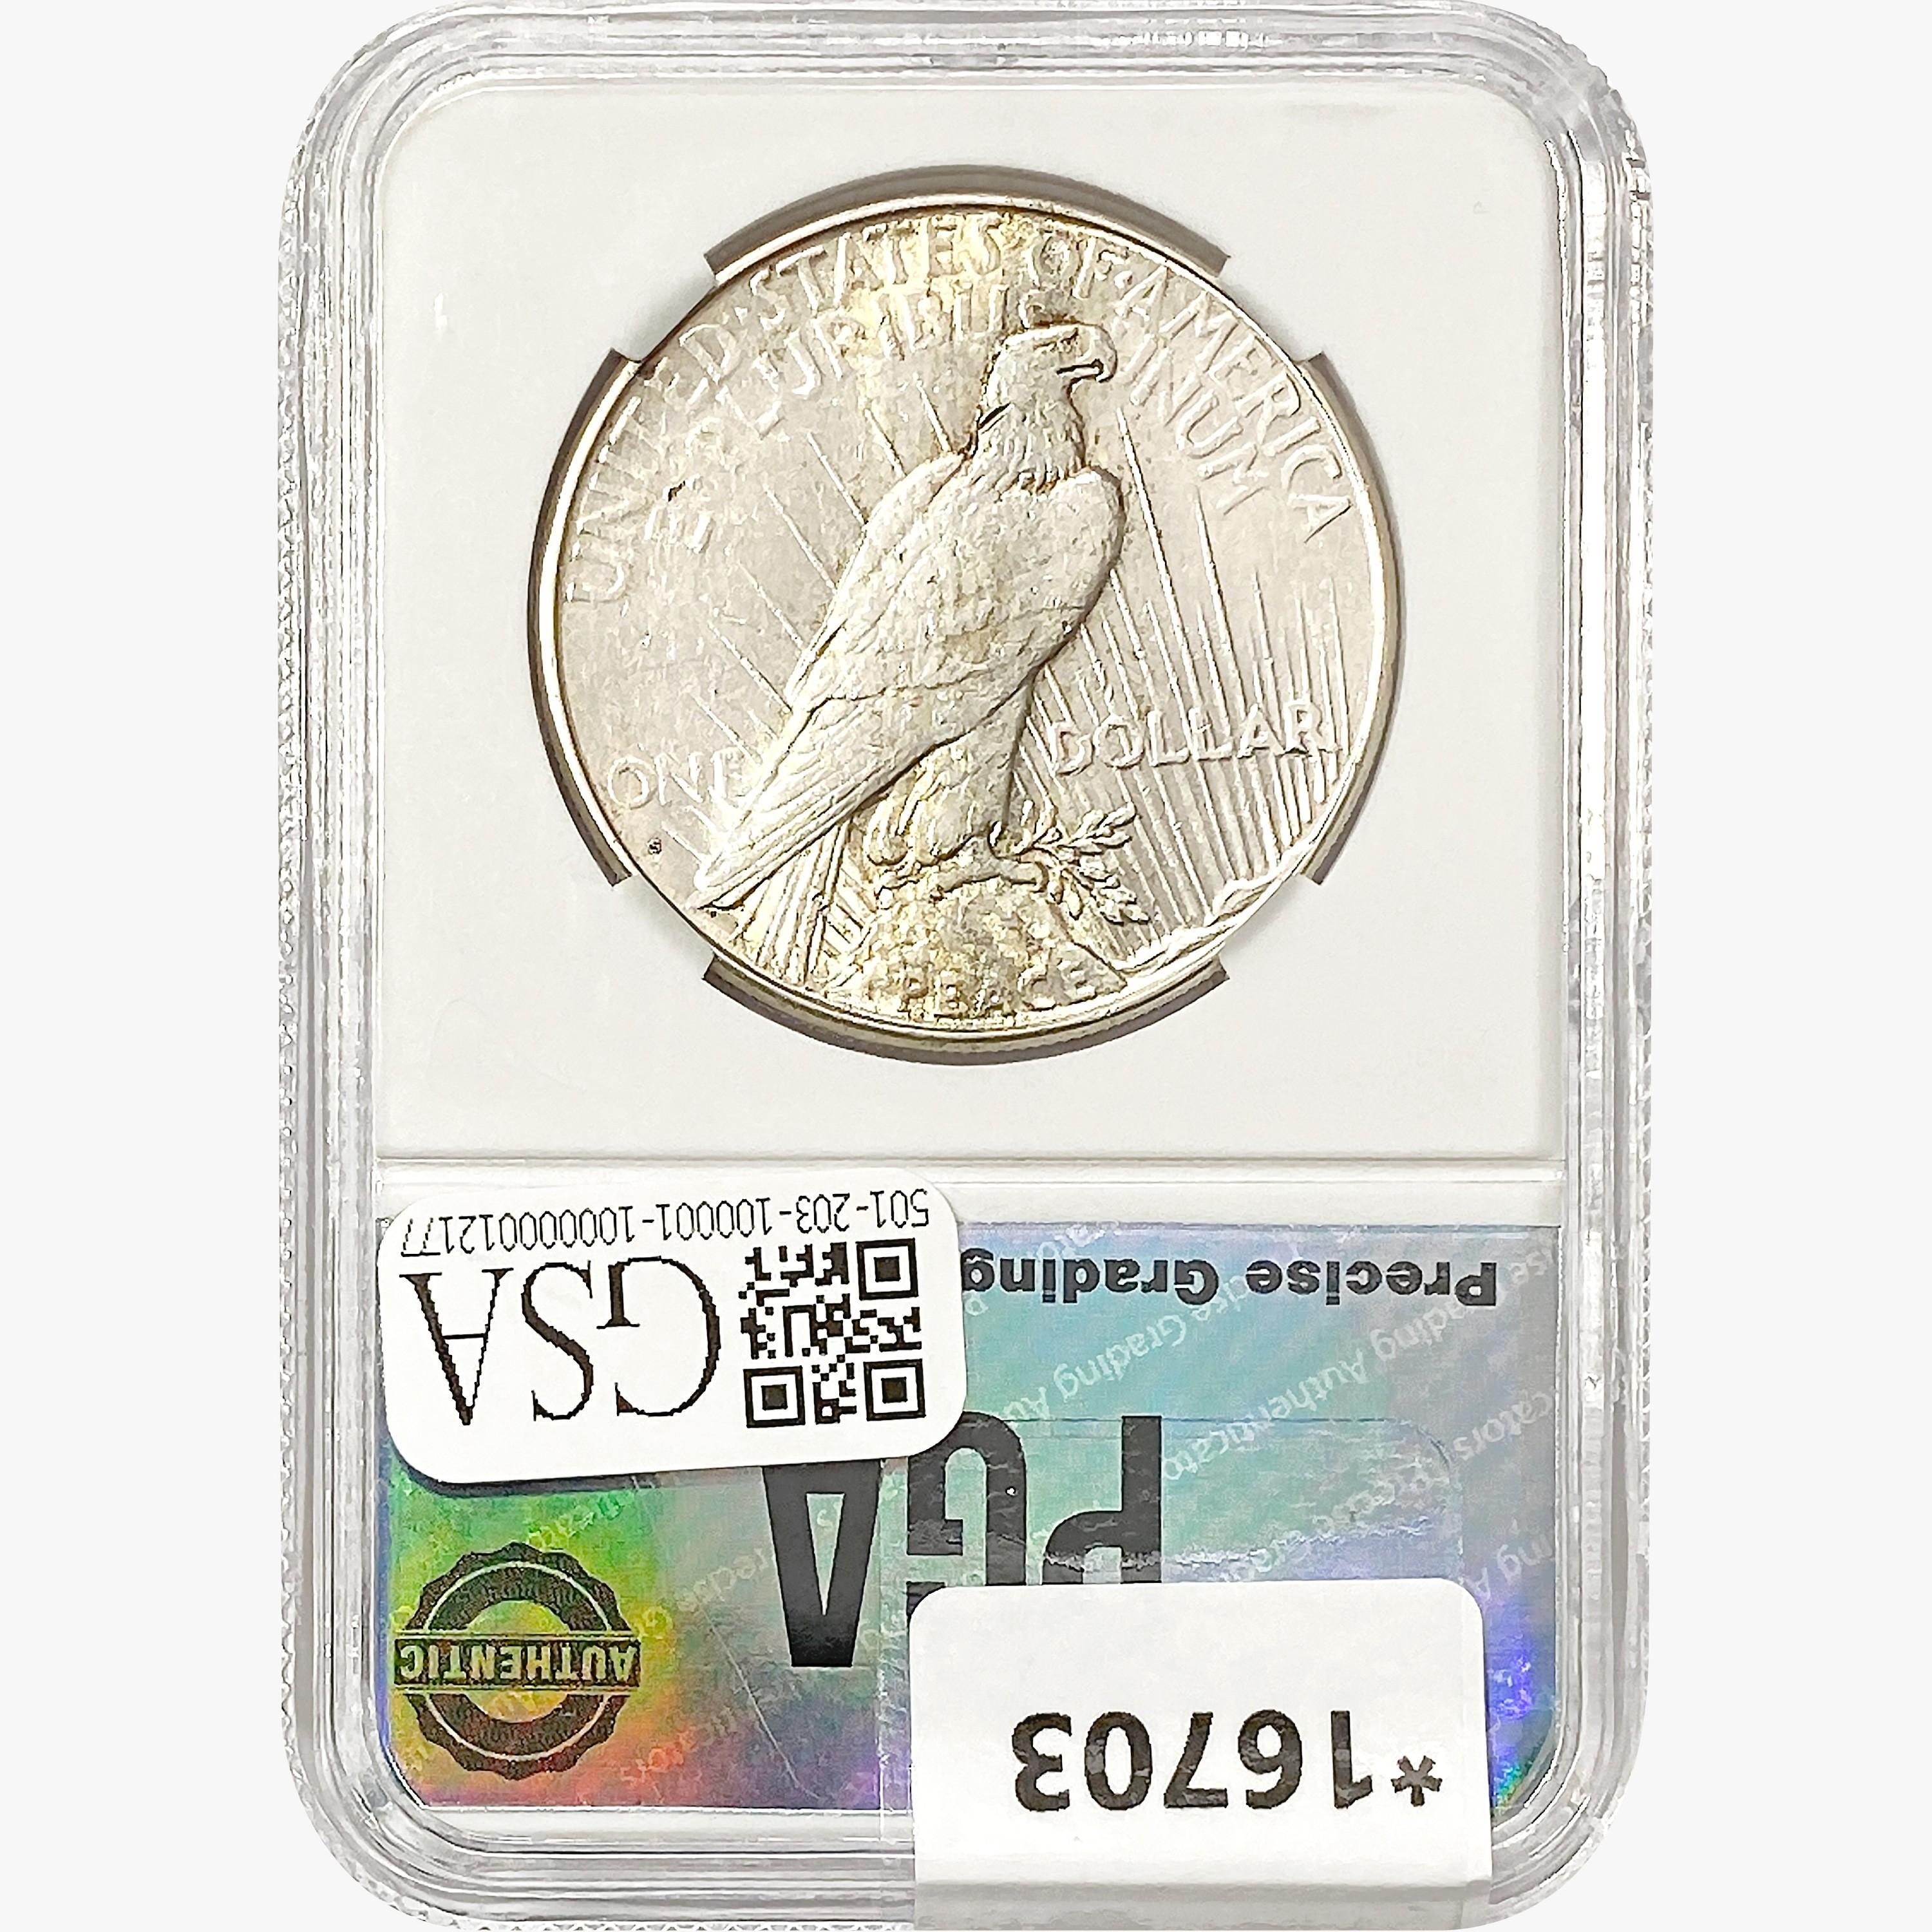 1927-S Silver Peace Dollar PGA MS61